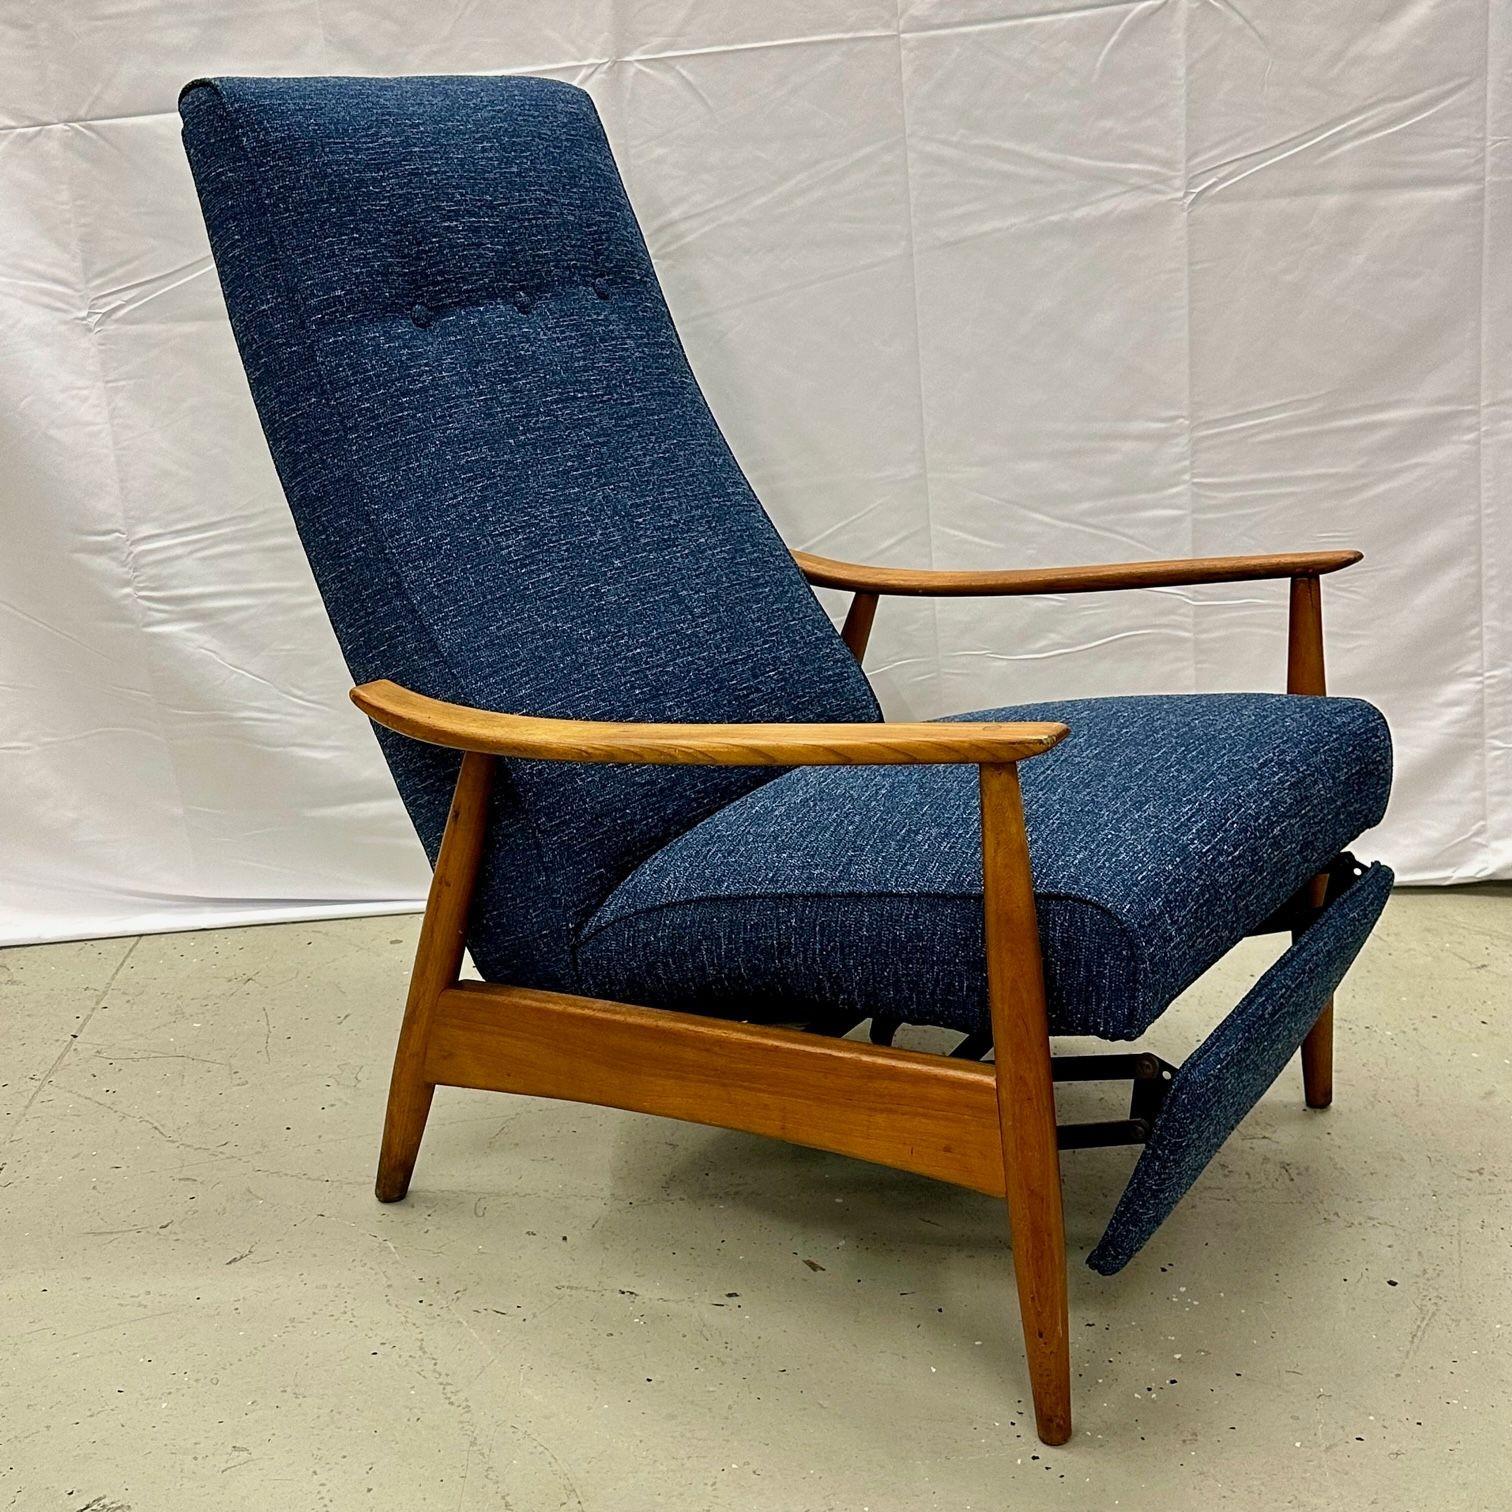 American Mid-Century Modern Reclining Lounge Chair by Milo Baughman, Thayer Coggin, 1950s